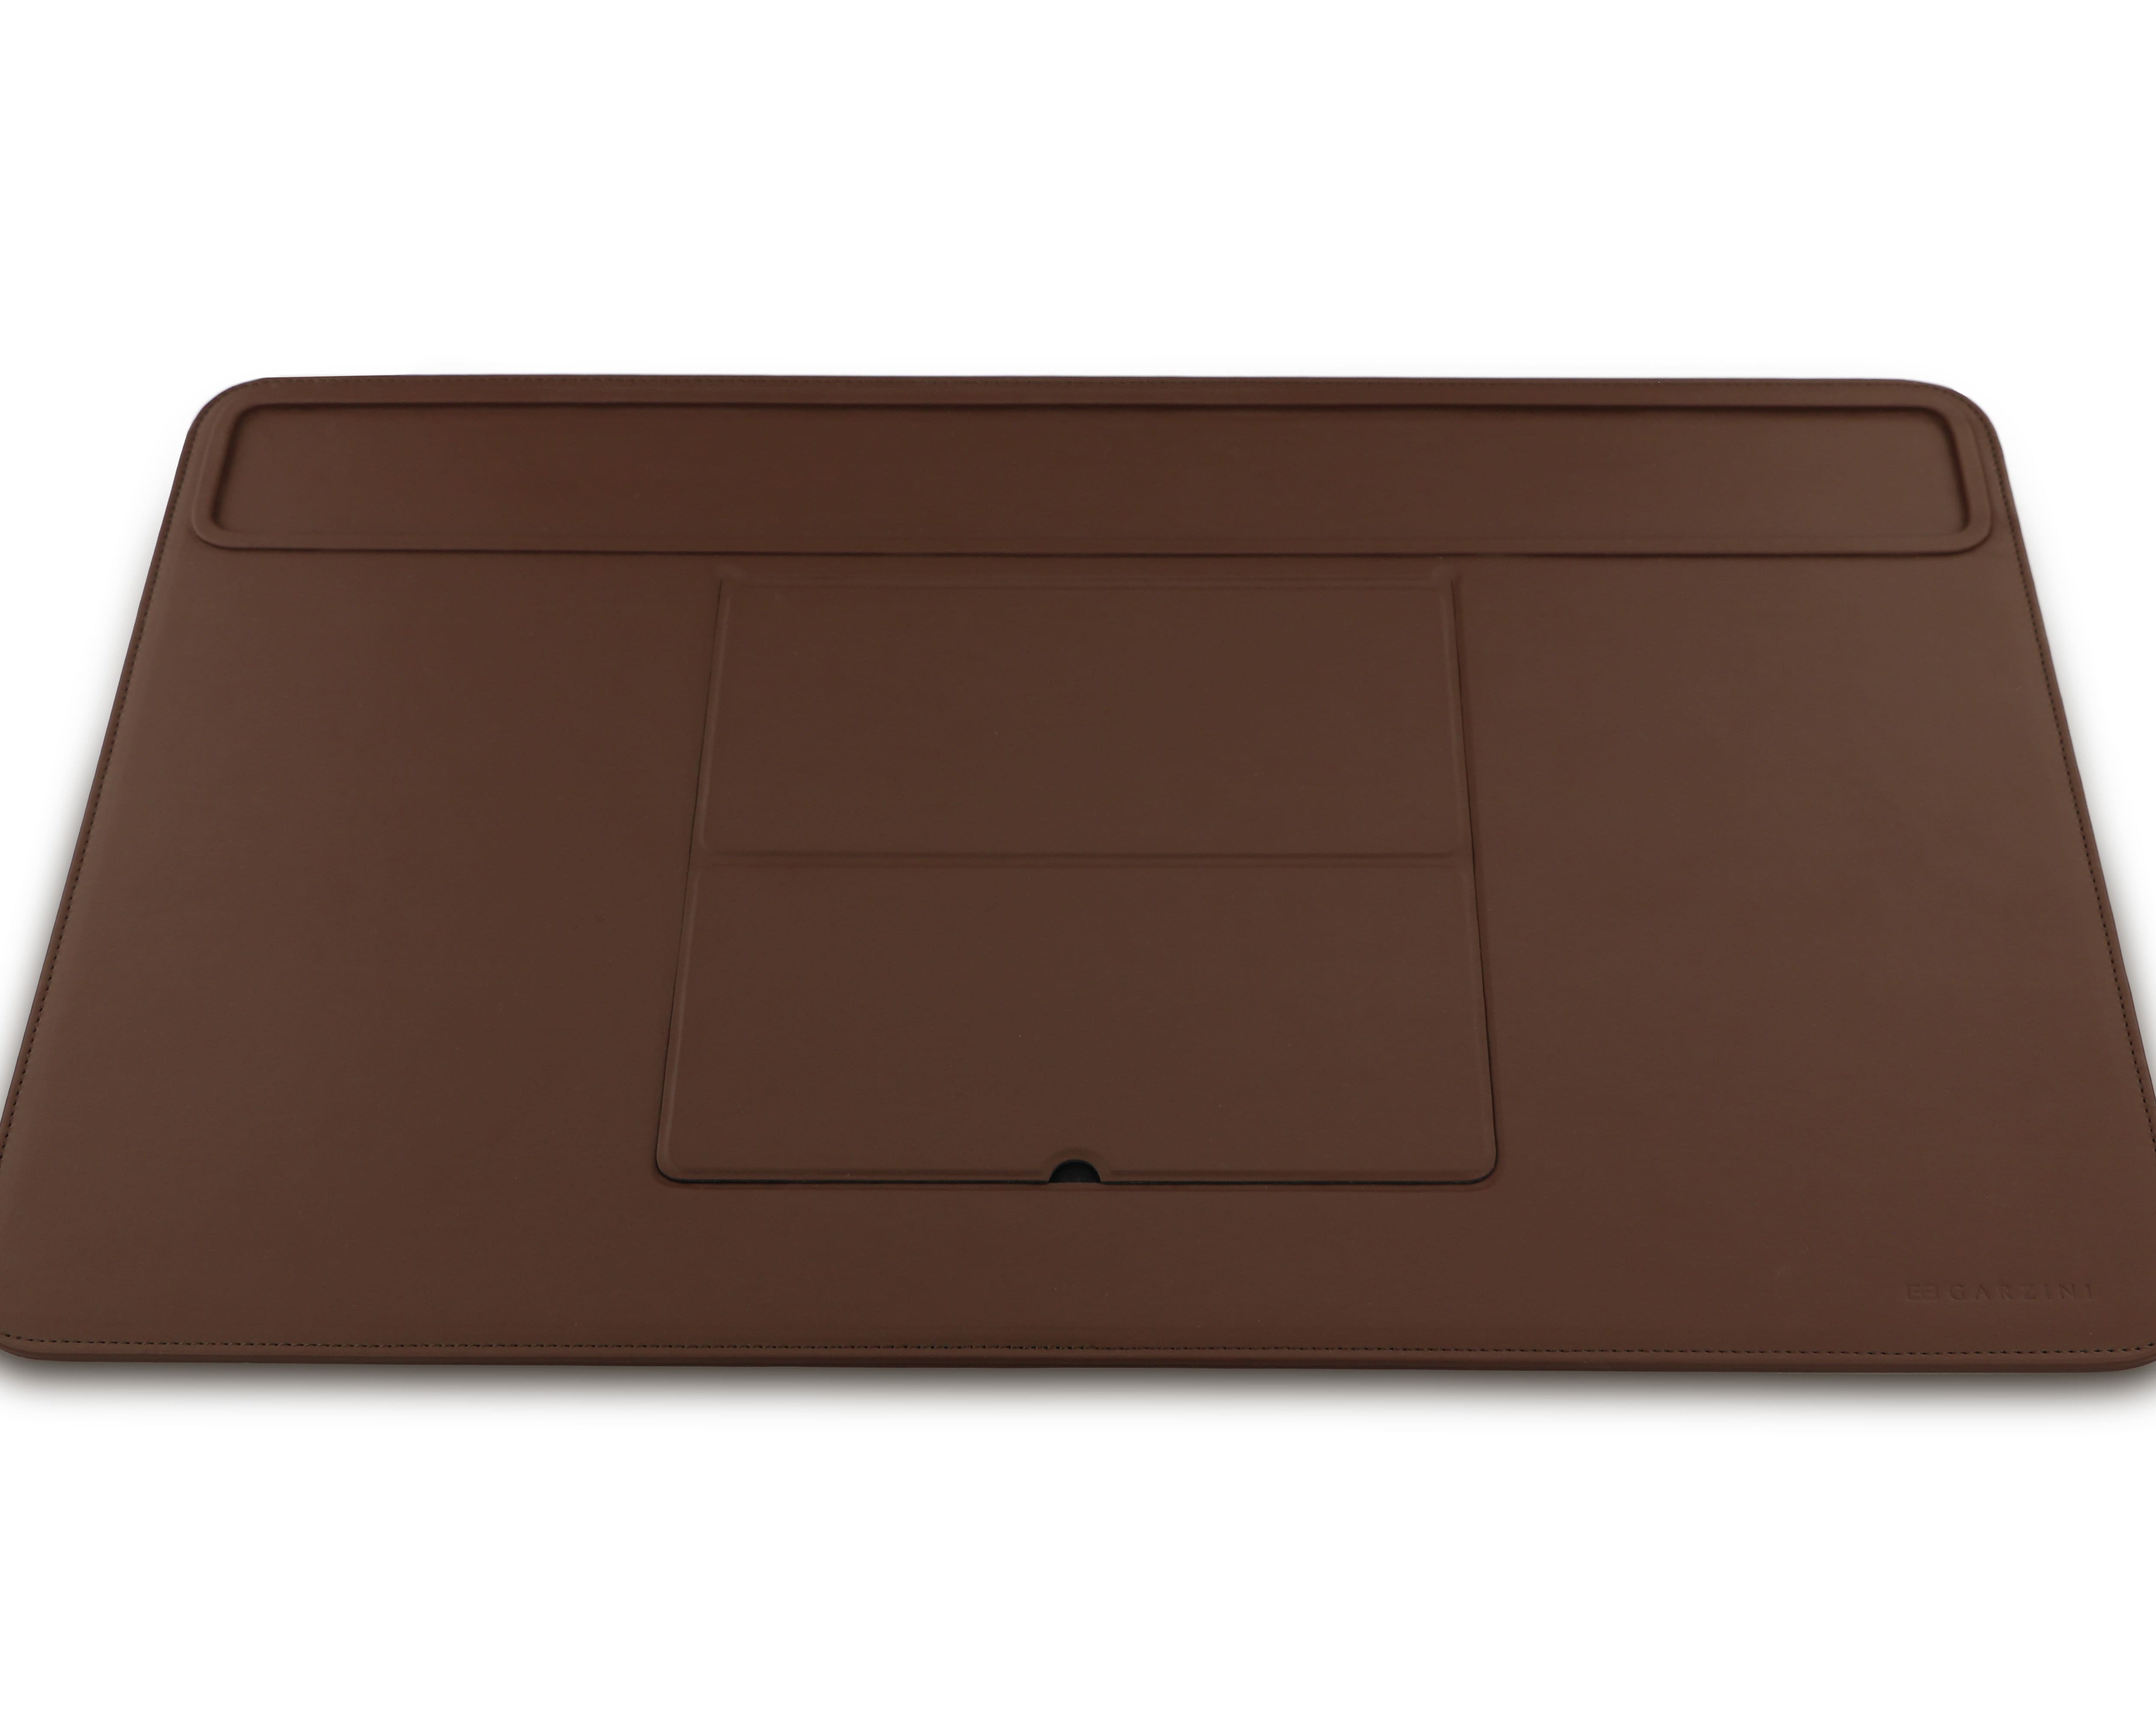 full view of the brown desk mat